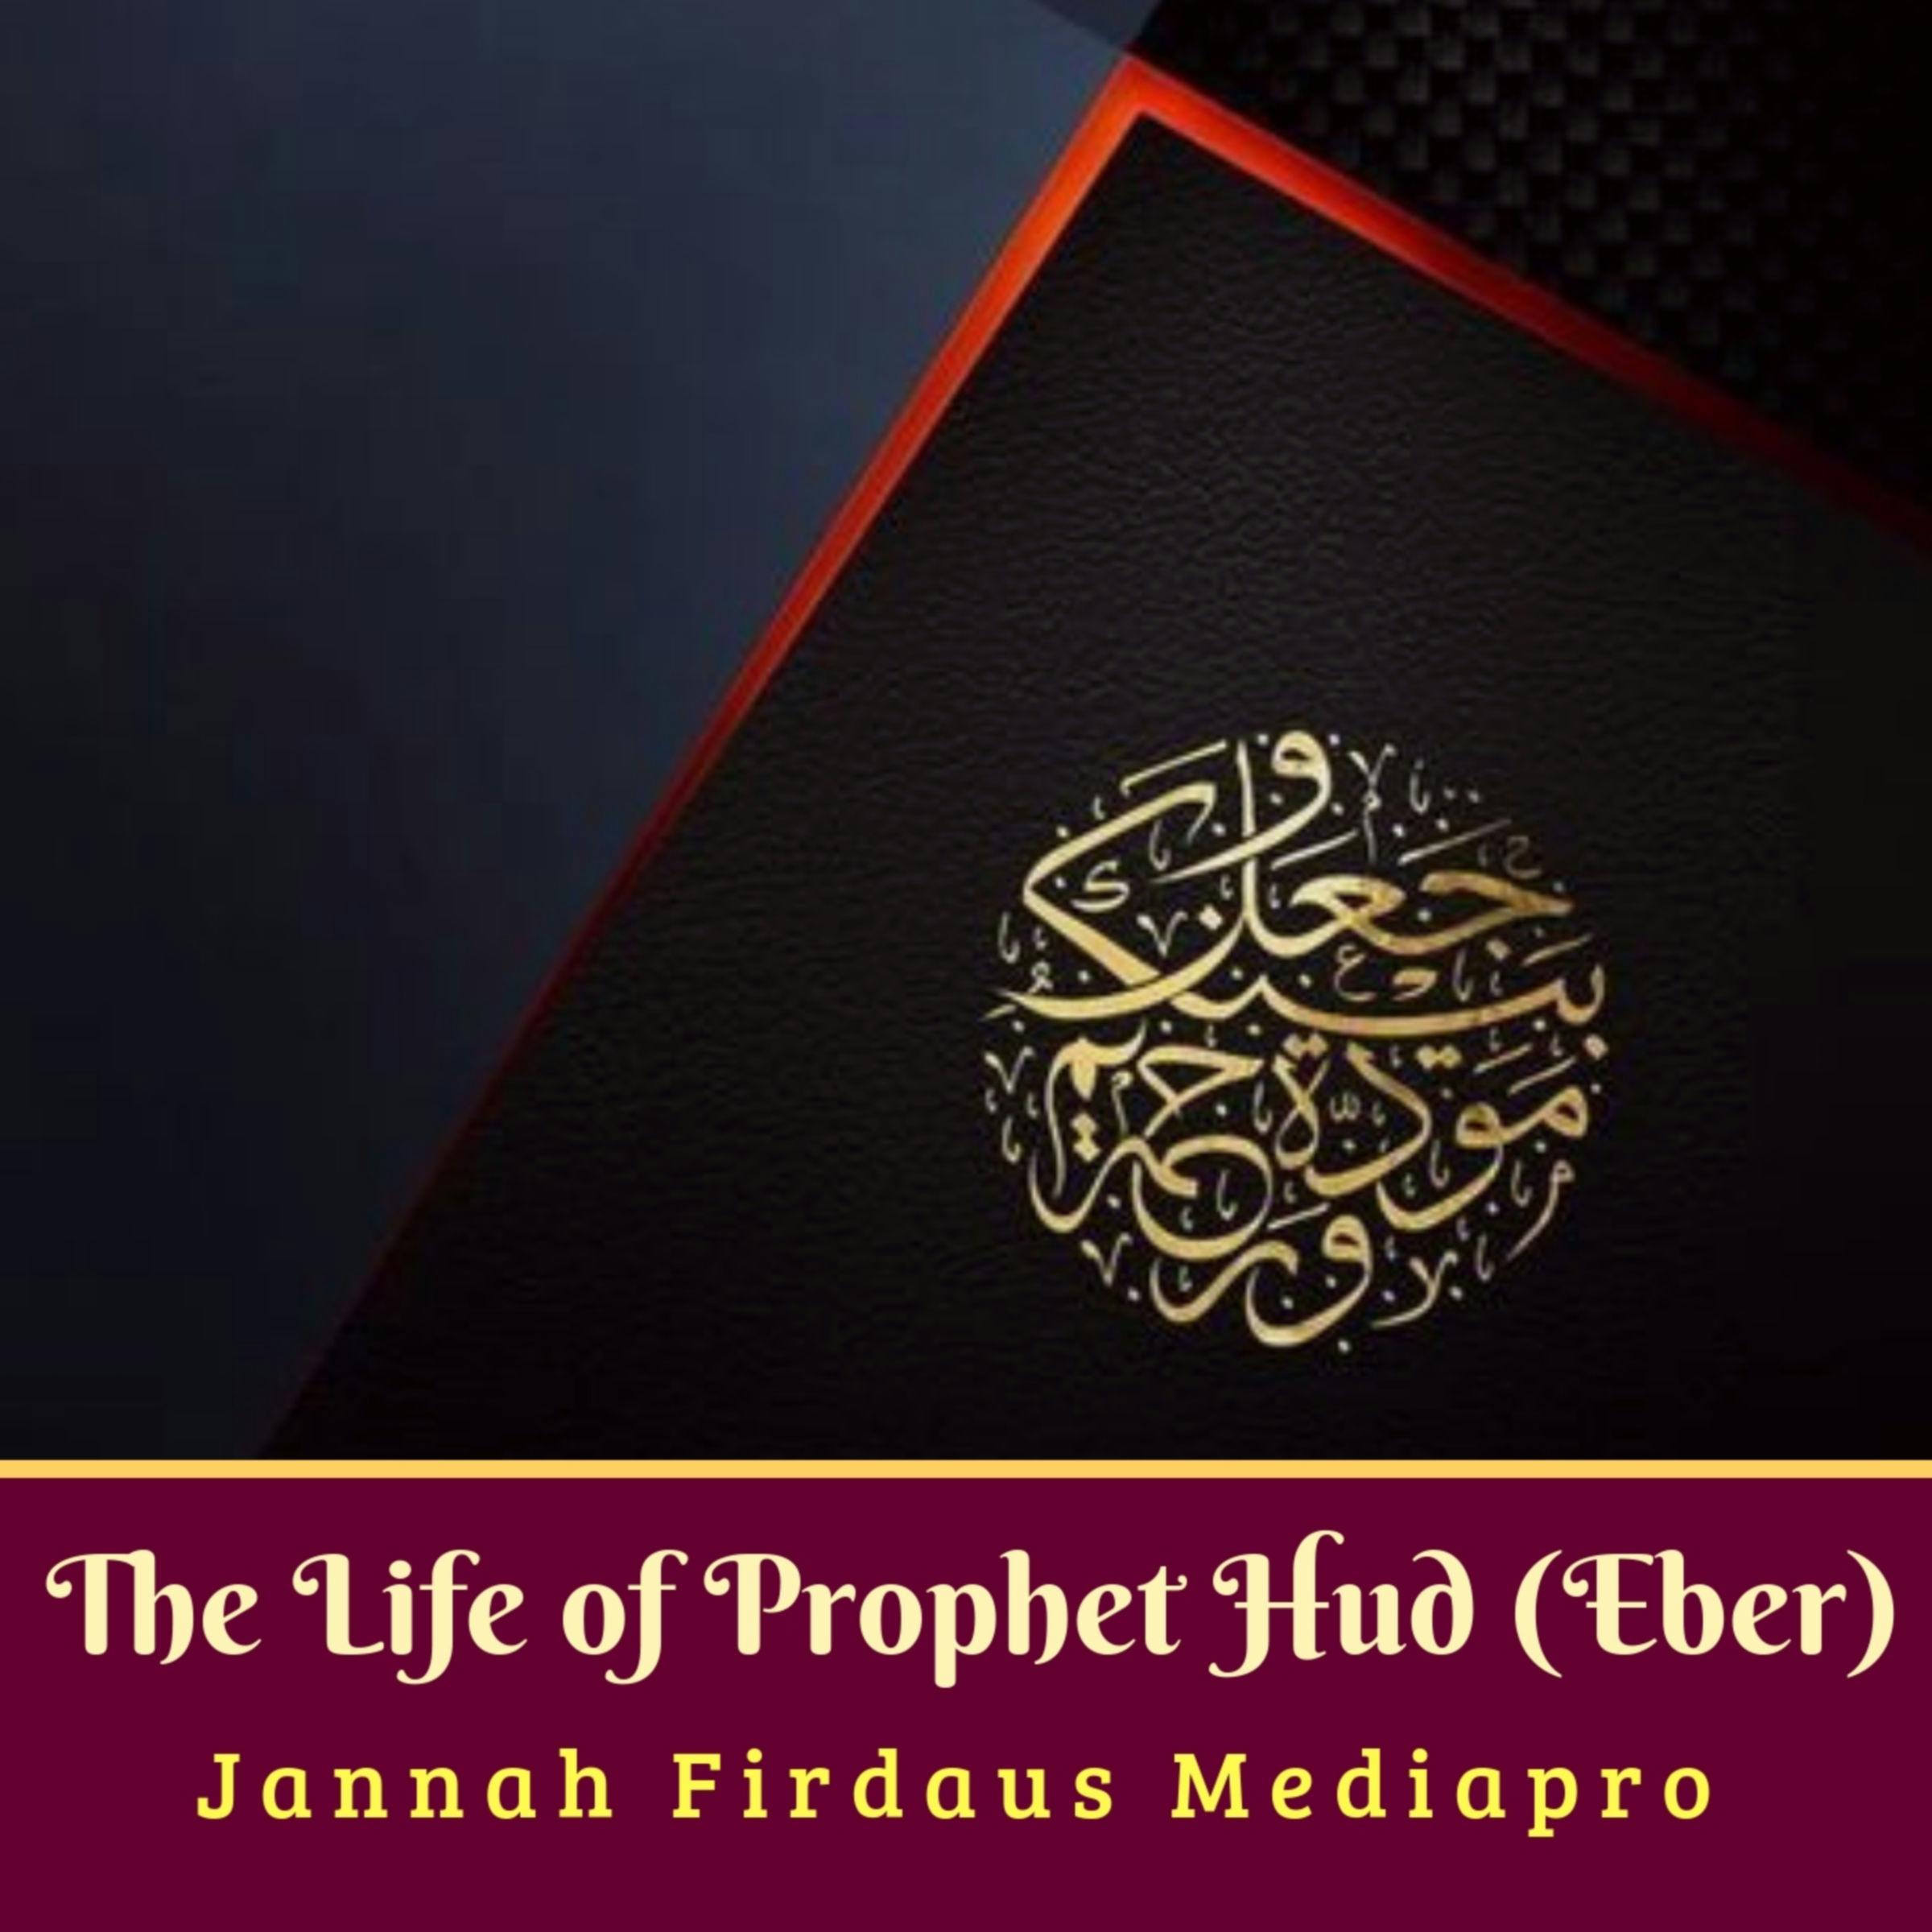 The Life of Prophet Hud (Eber) - undefined